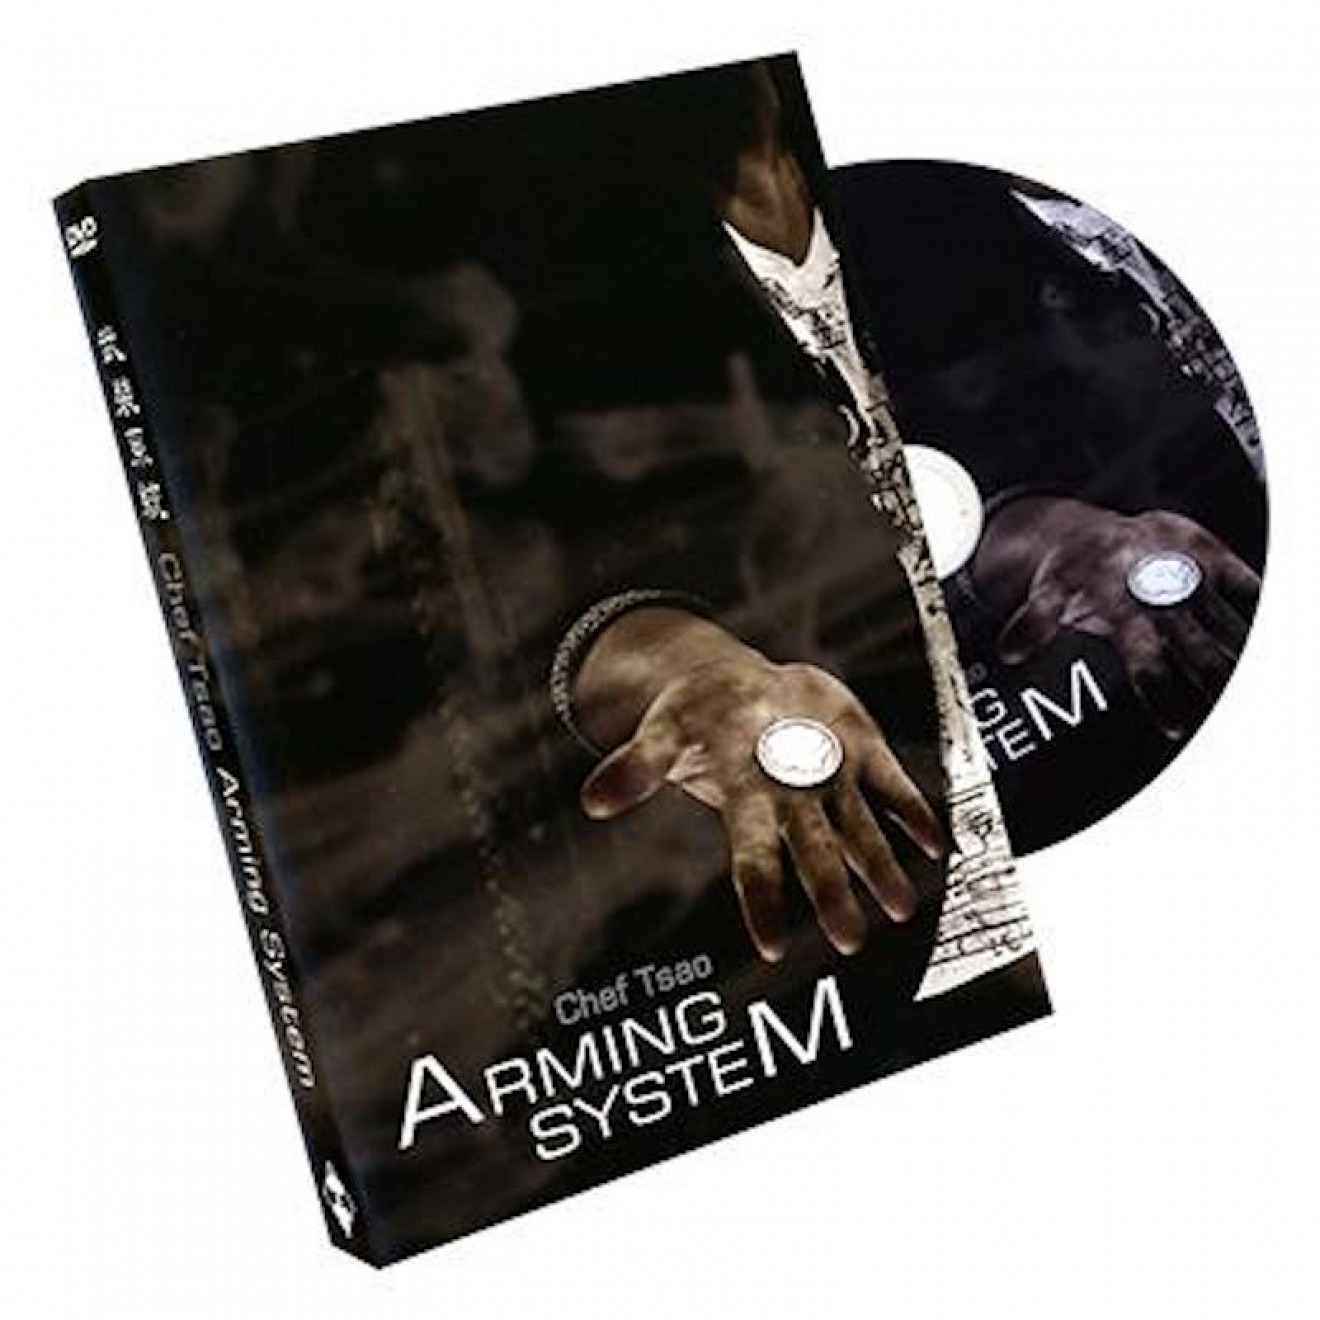 Arming System (DVD)